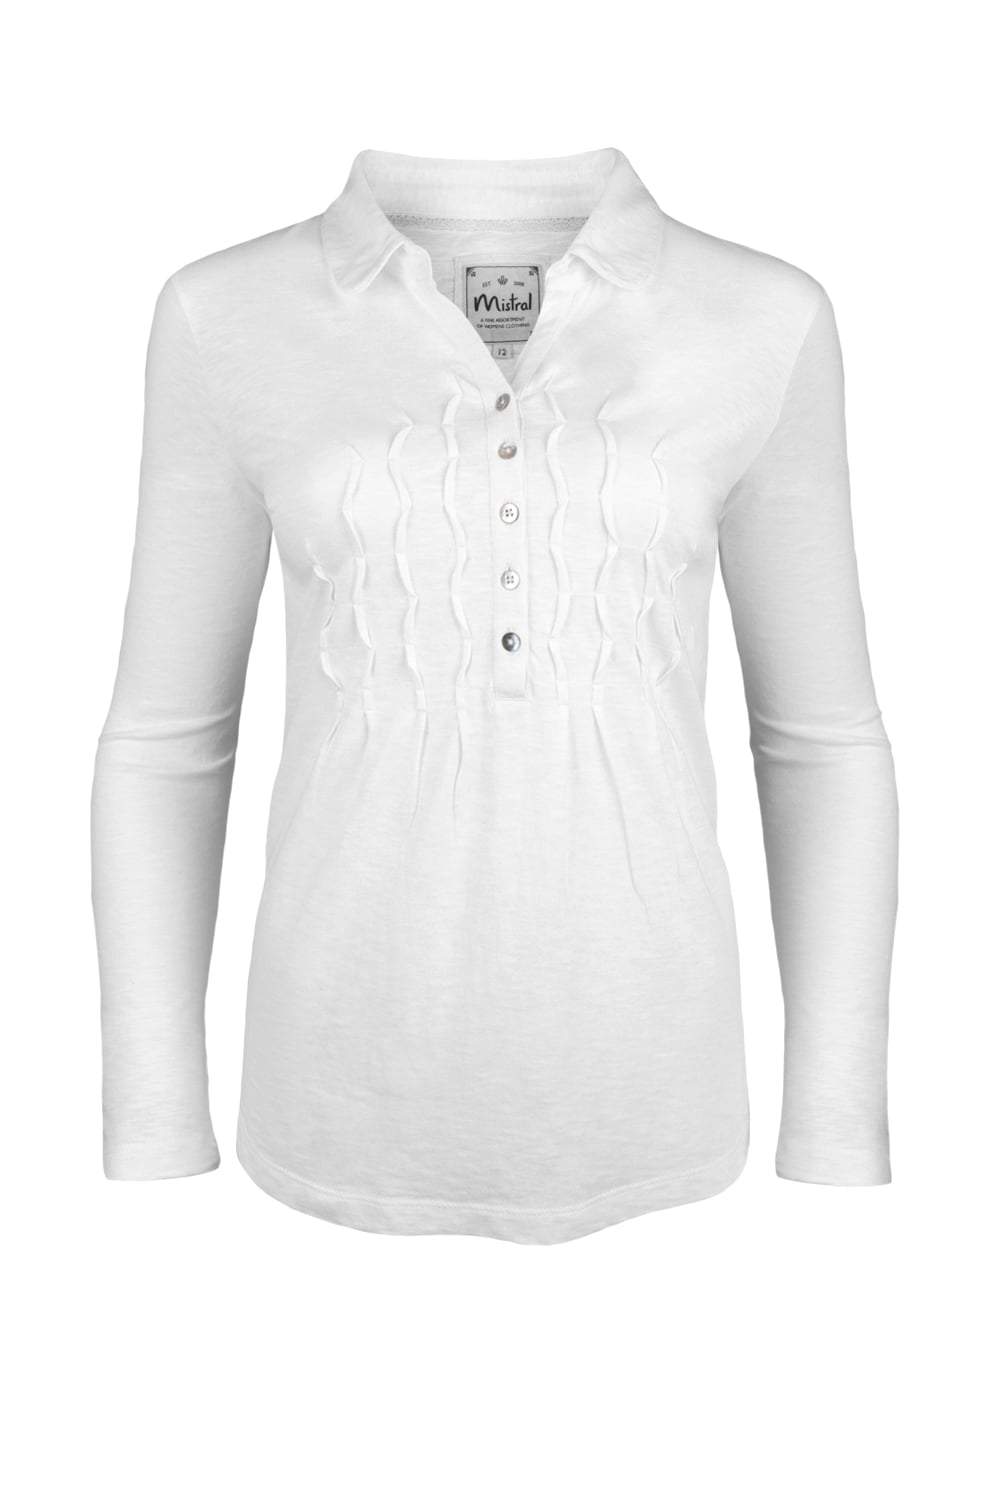 Women's White Jersey Shirt | Mistral – Mistral Online